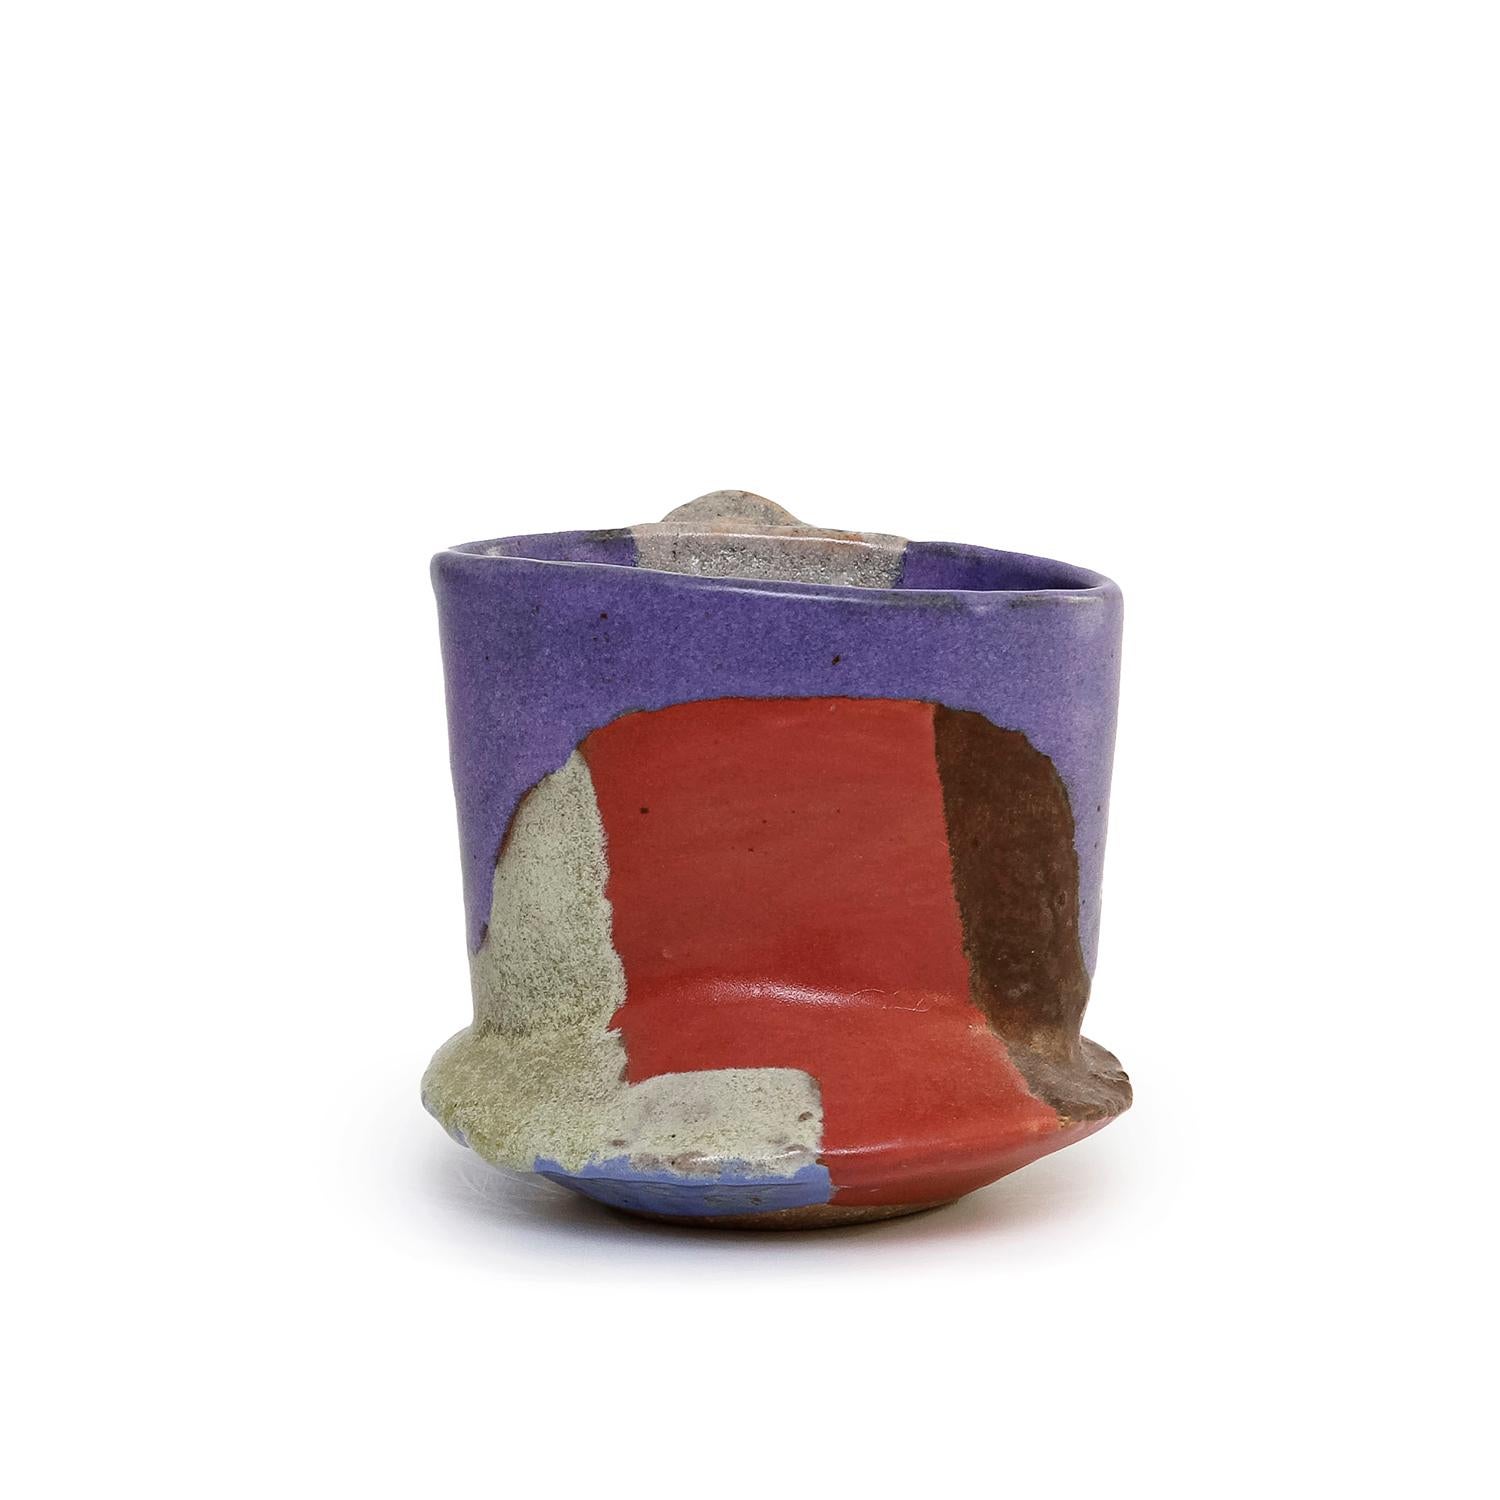 John Gill
Oblong Mug (INV# NP3732)
stoneware and glaze
2002
signed by artist